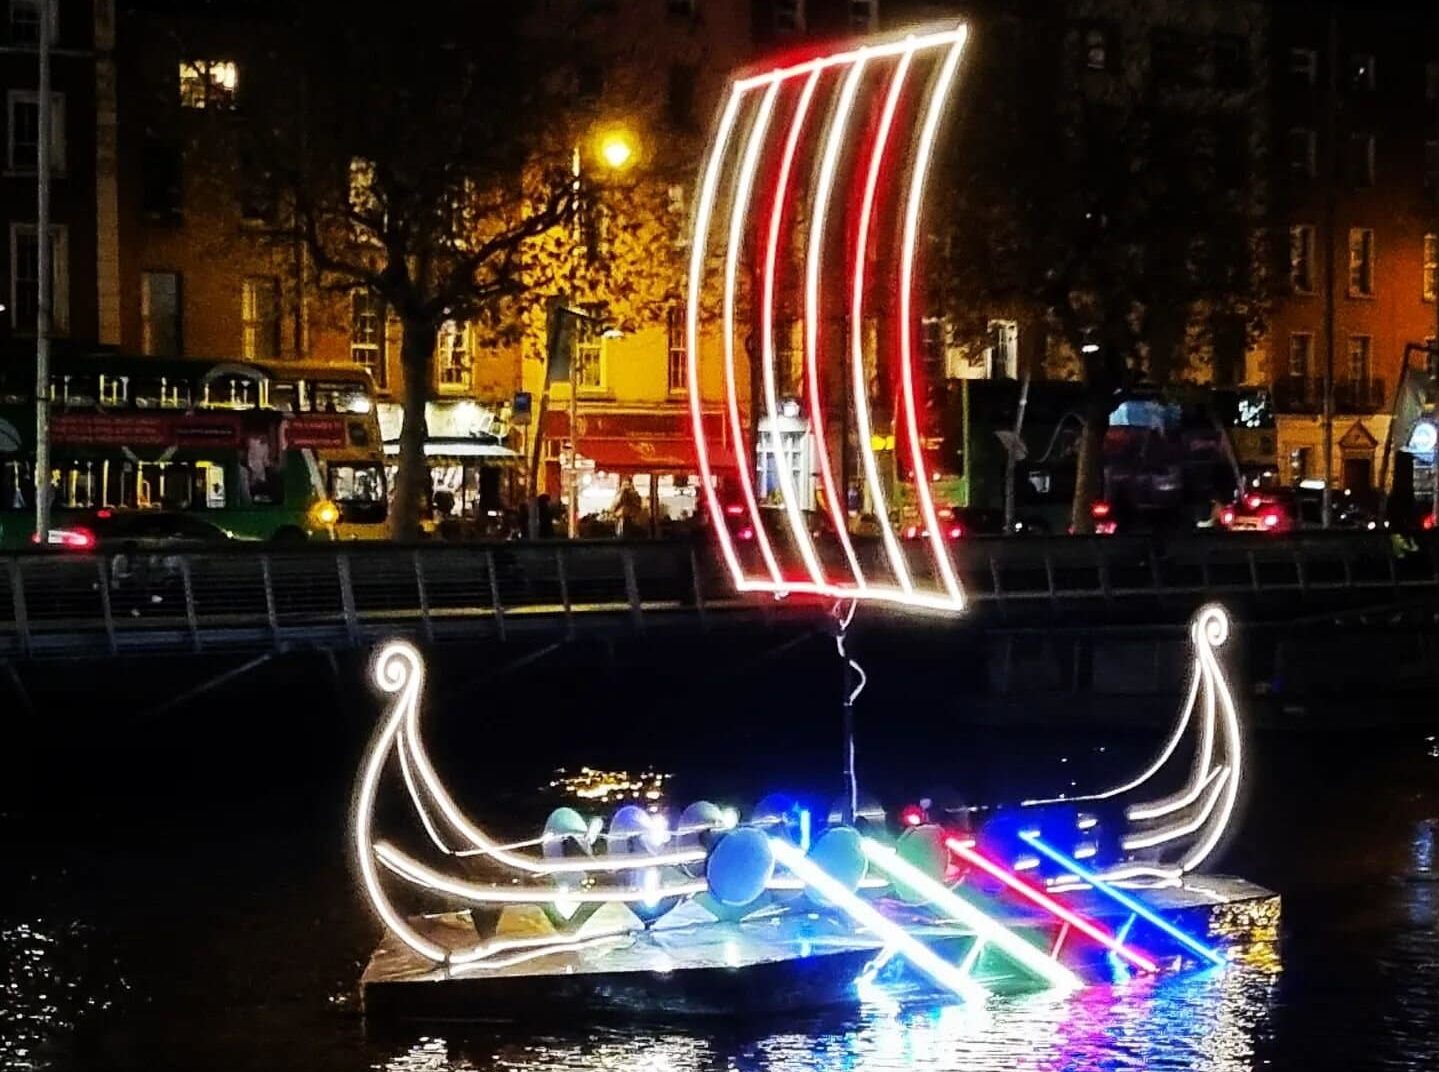 An illuminated Viking boat on the River Liffey at Dublin's Winter Lights.